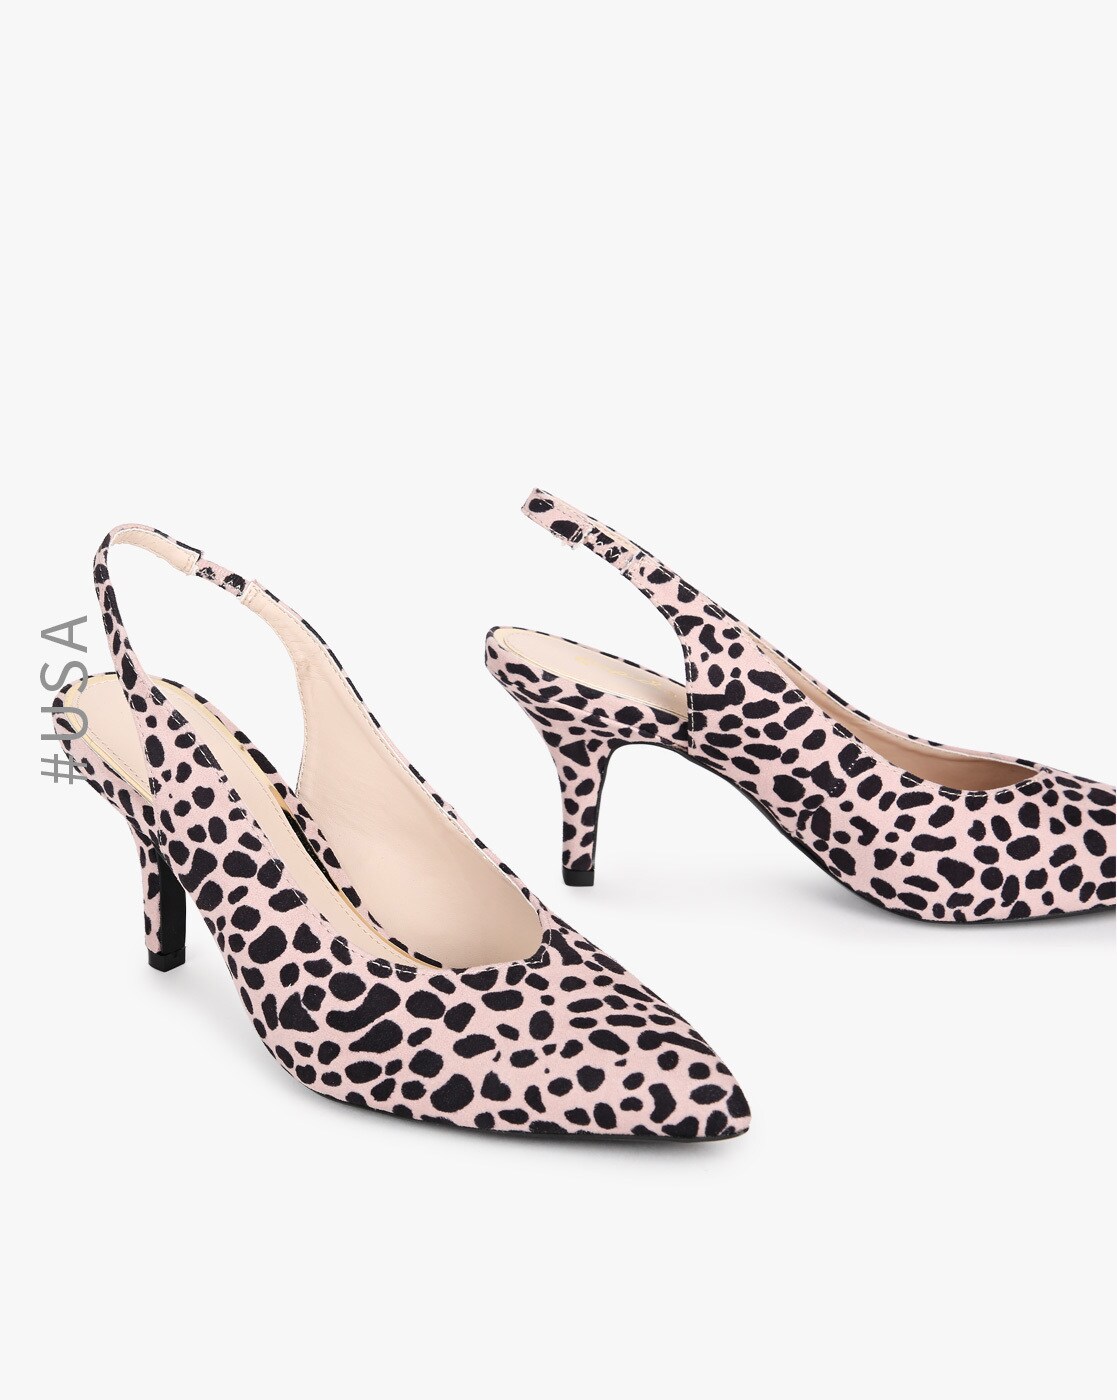 qupid cheetah shoes